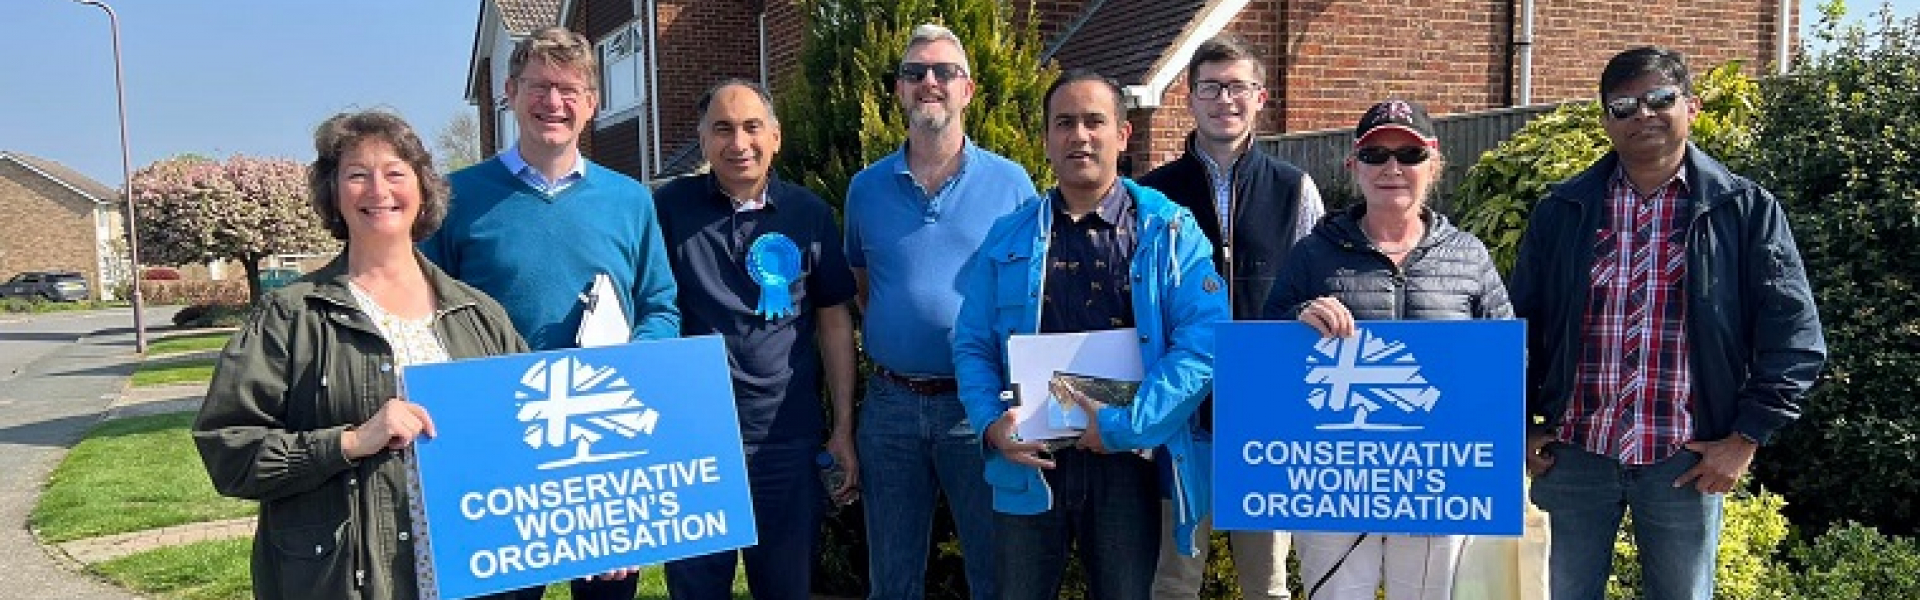 Tunbridge Wells Conservatives Campaigning